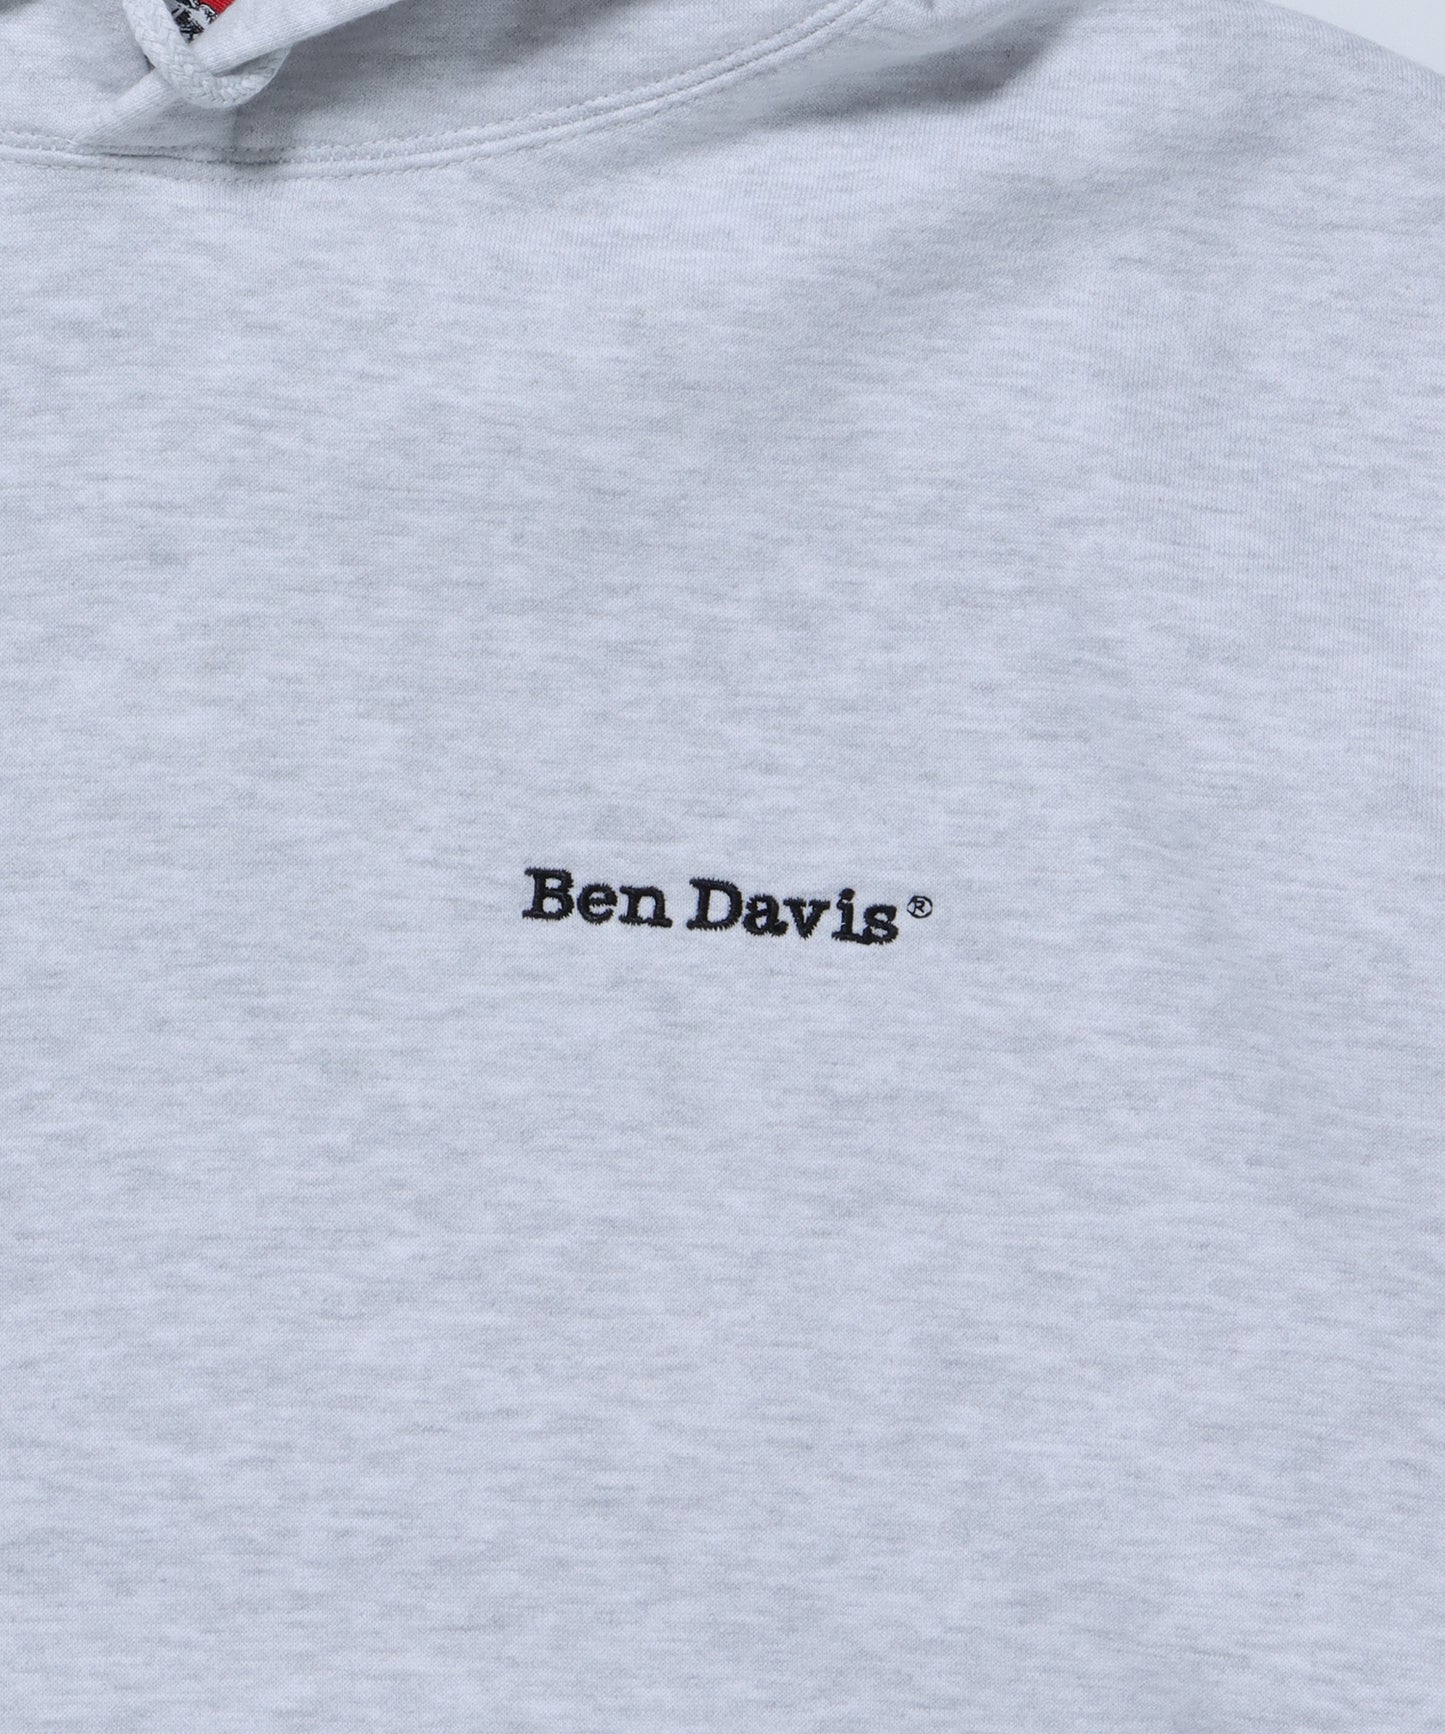 【BEN DAVIS(ベンデイビス)】 HEAVY SWEAT HOODIE NVL / ビッグ スウェット ヘビーウェイト 限定 パーカー オフホワイト